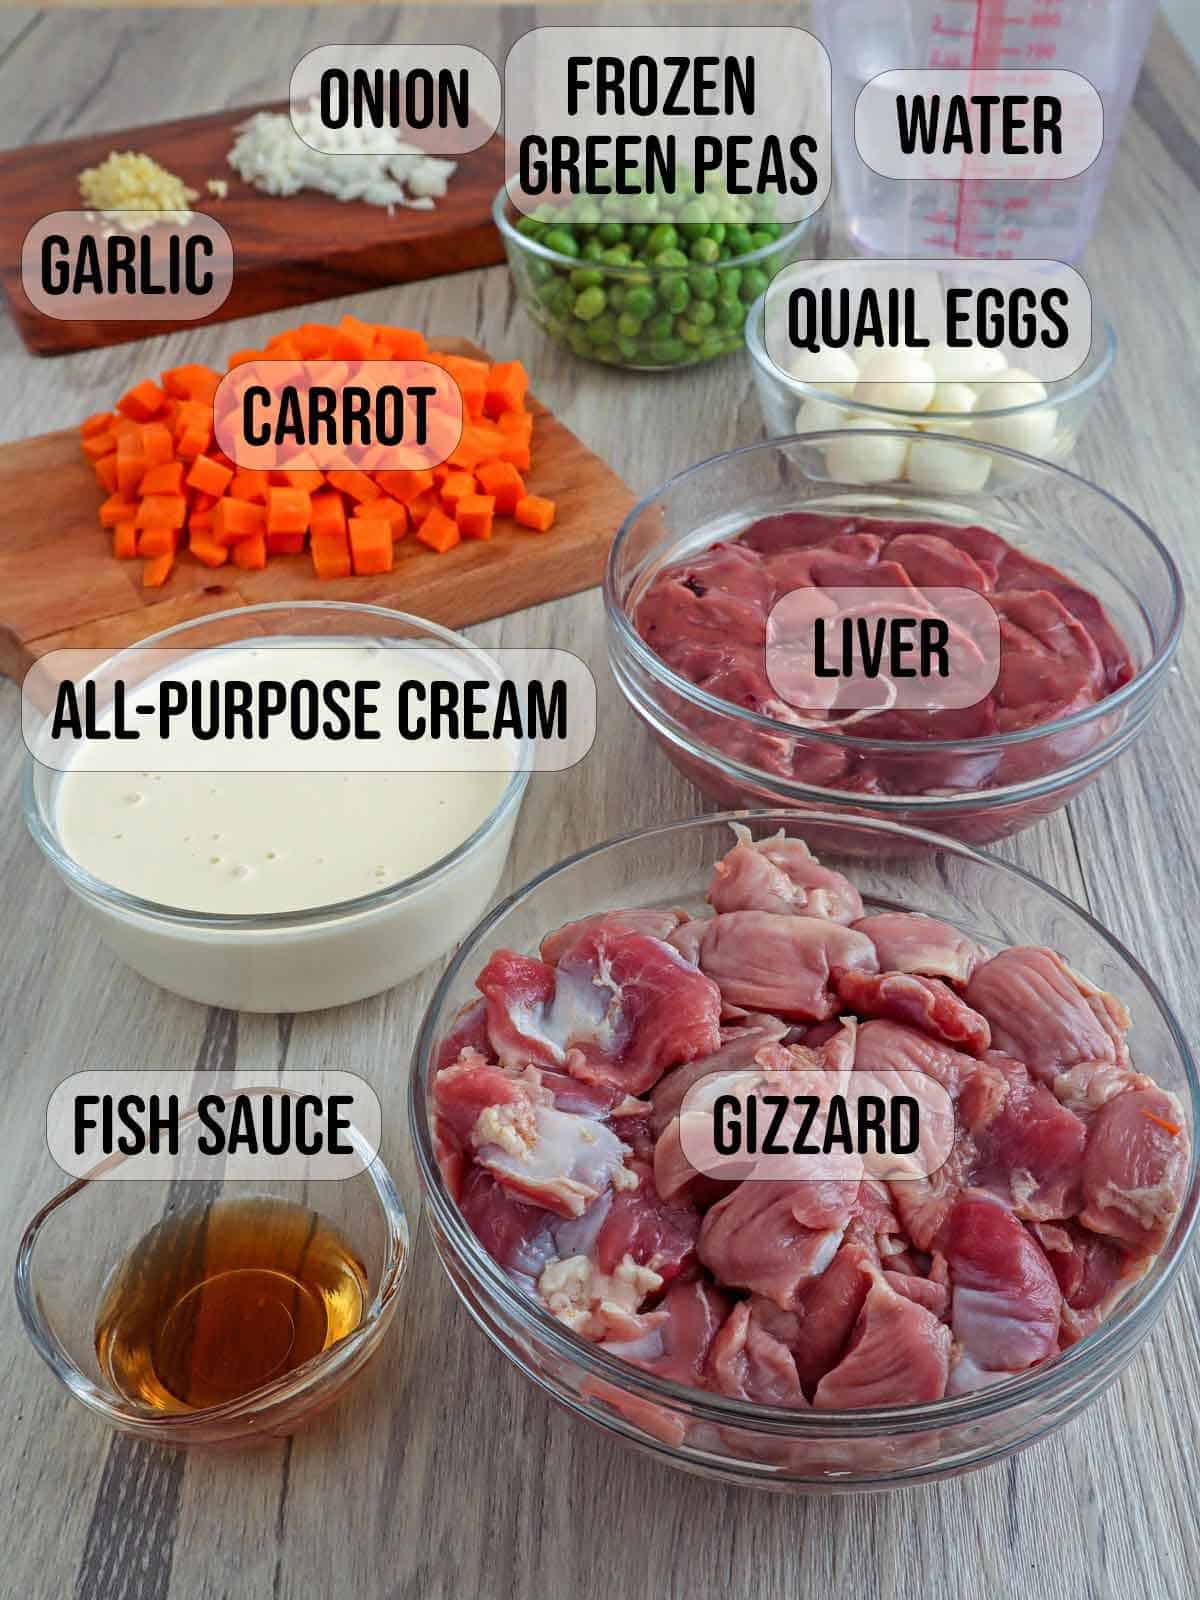 chicken liver, gizzard, table cream, green peas, onions, garlic, quail eggs, fish sauce, water, oil.